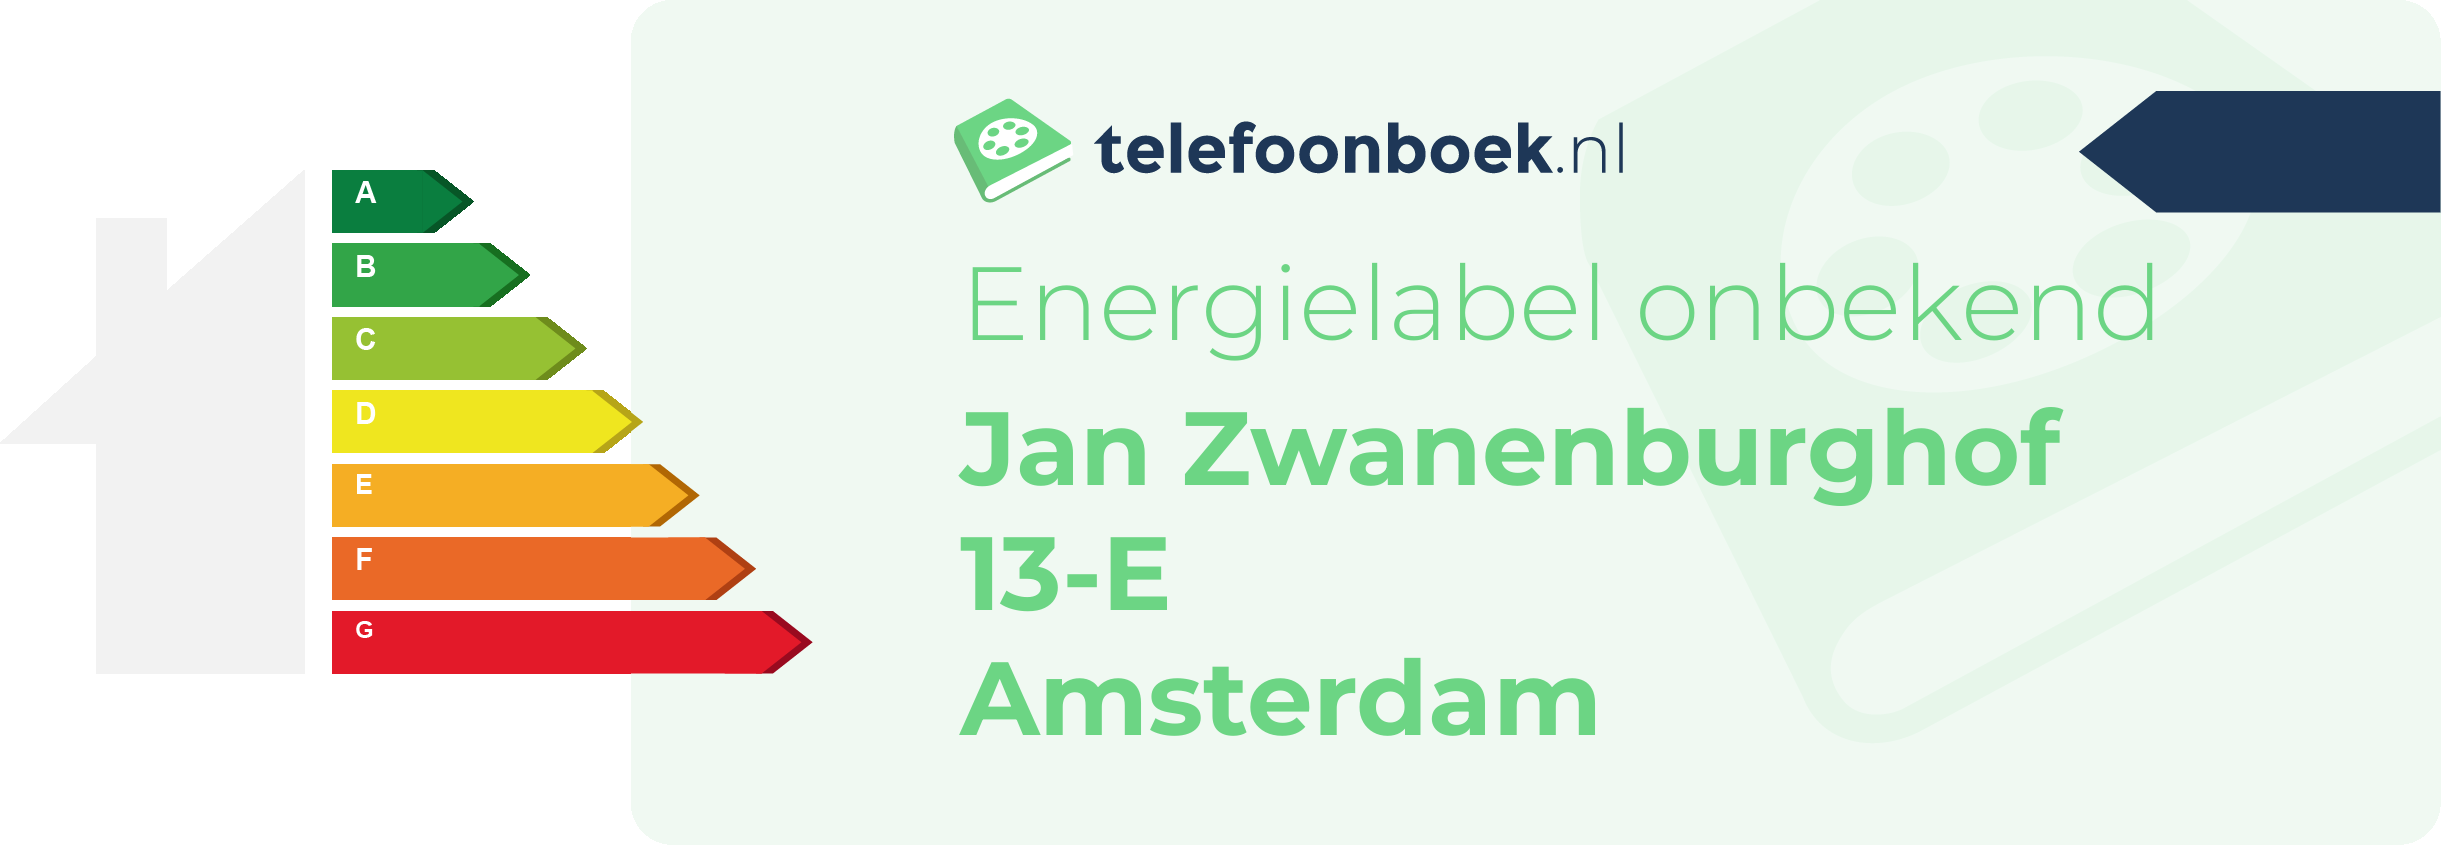 Energielabel Jan Zwanenburghof 13-E Amsterdam